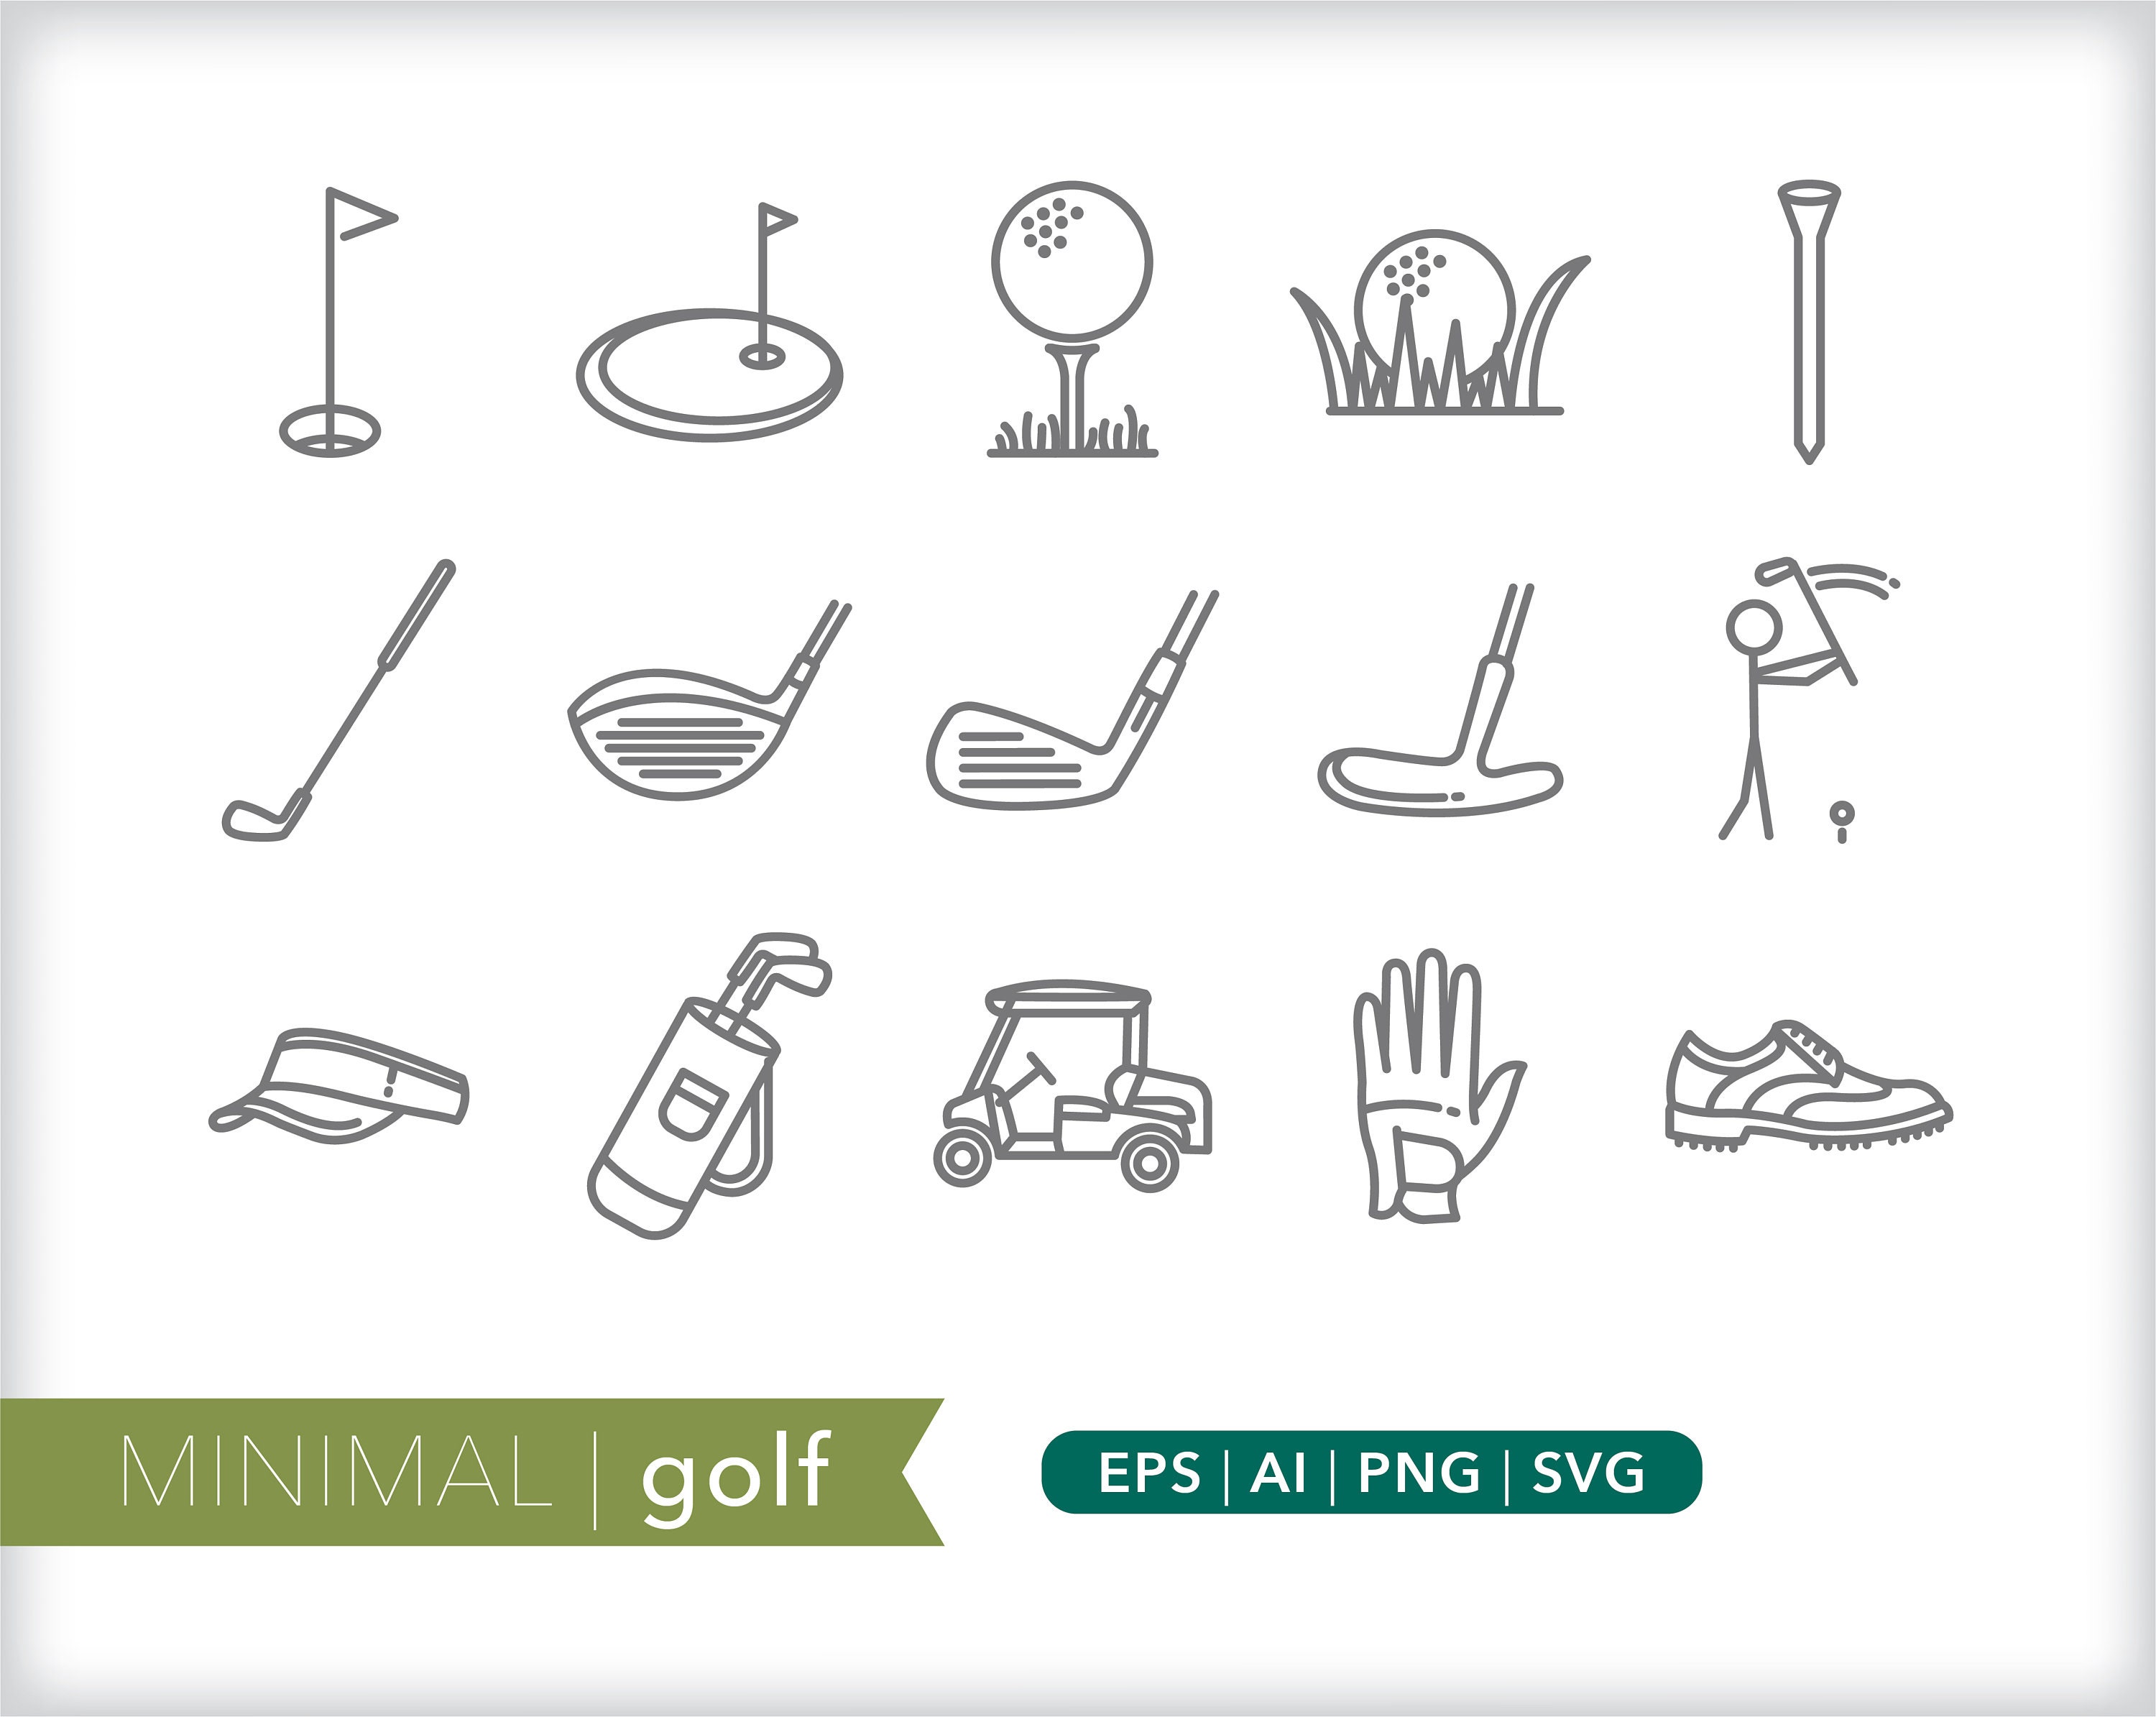 23 Memorial ideas  golf tattoo golf design golf logo